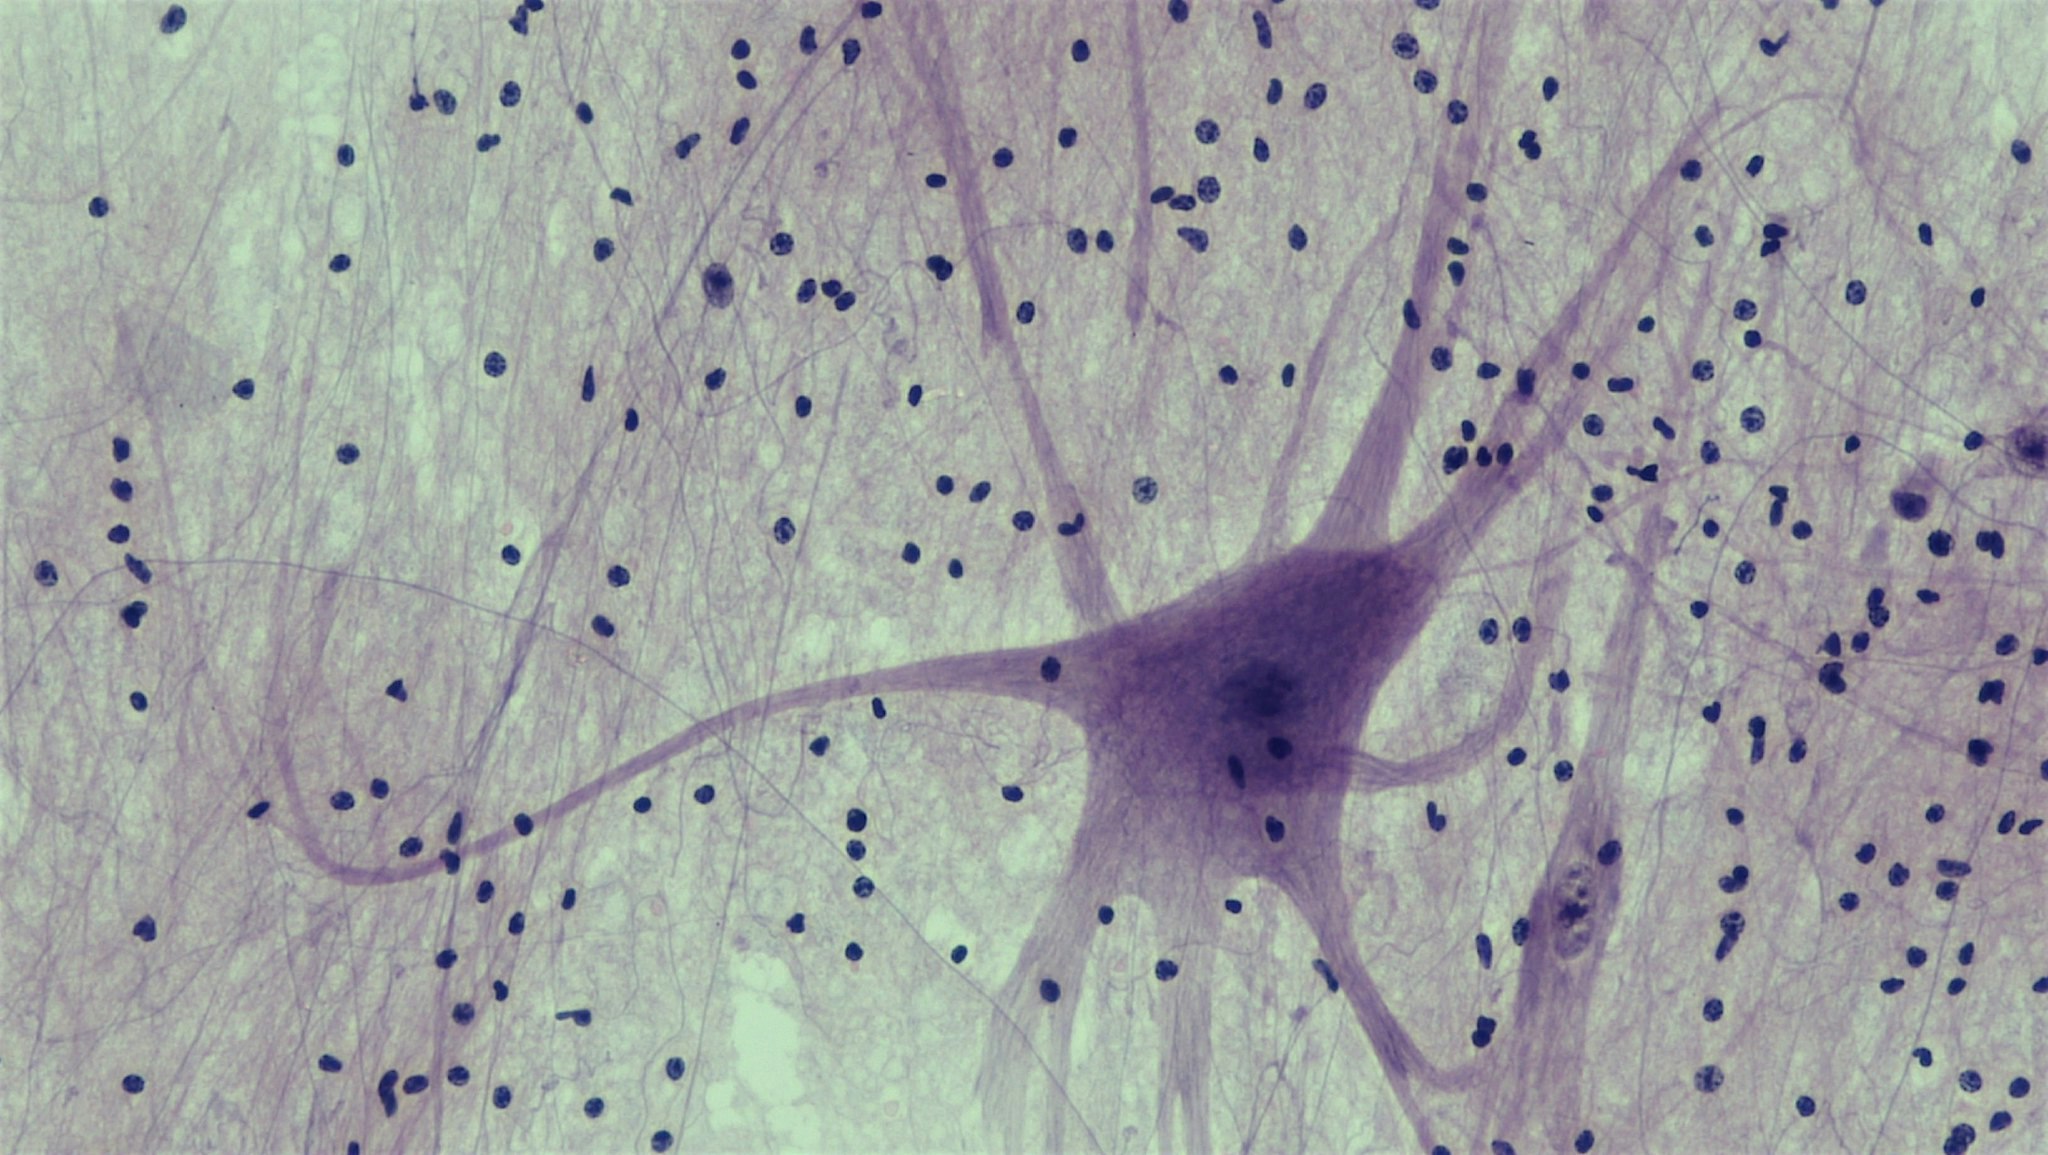 Spinal cord motor neuron